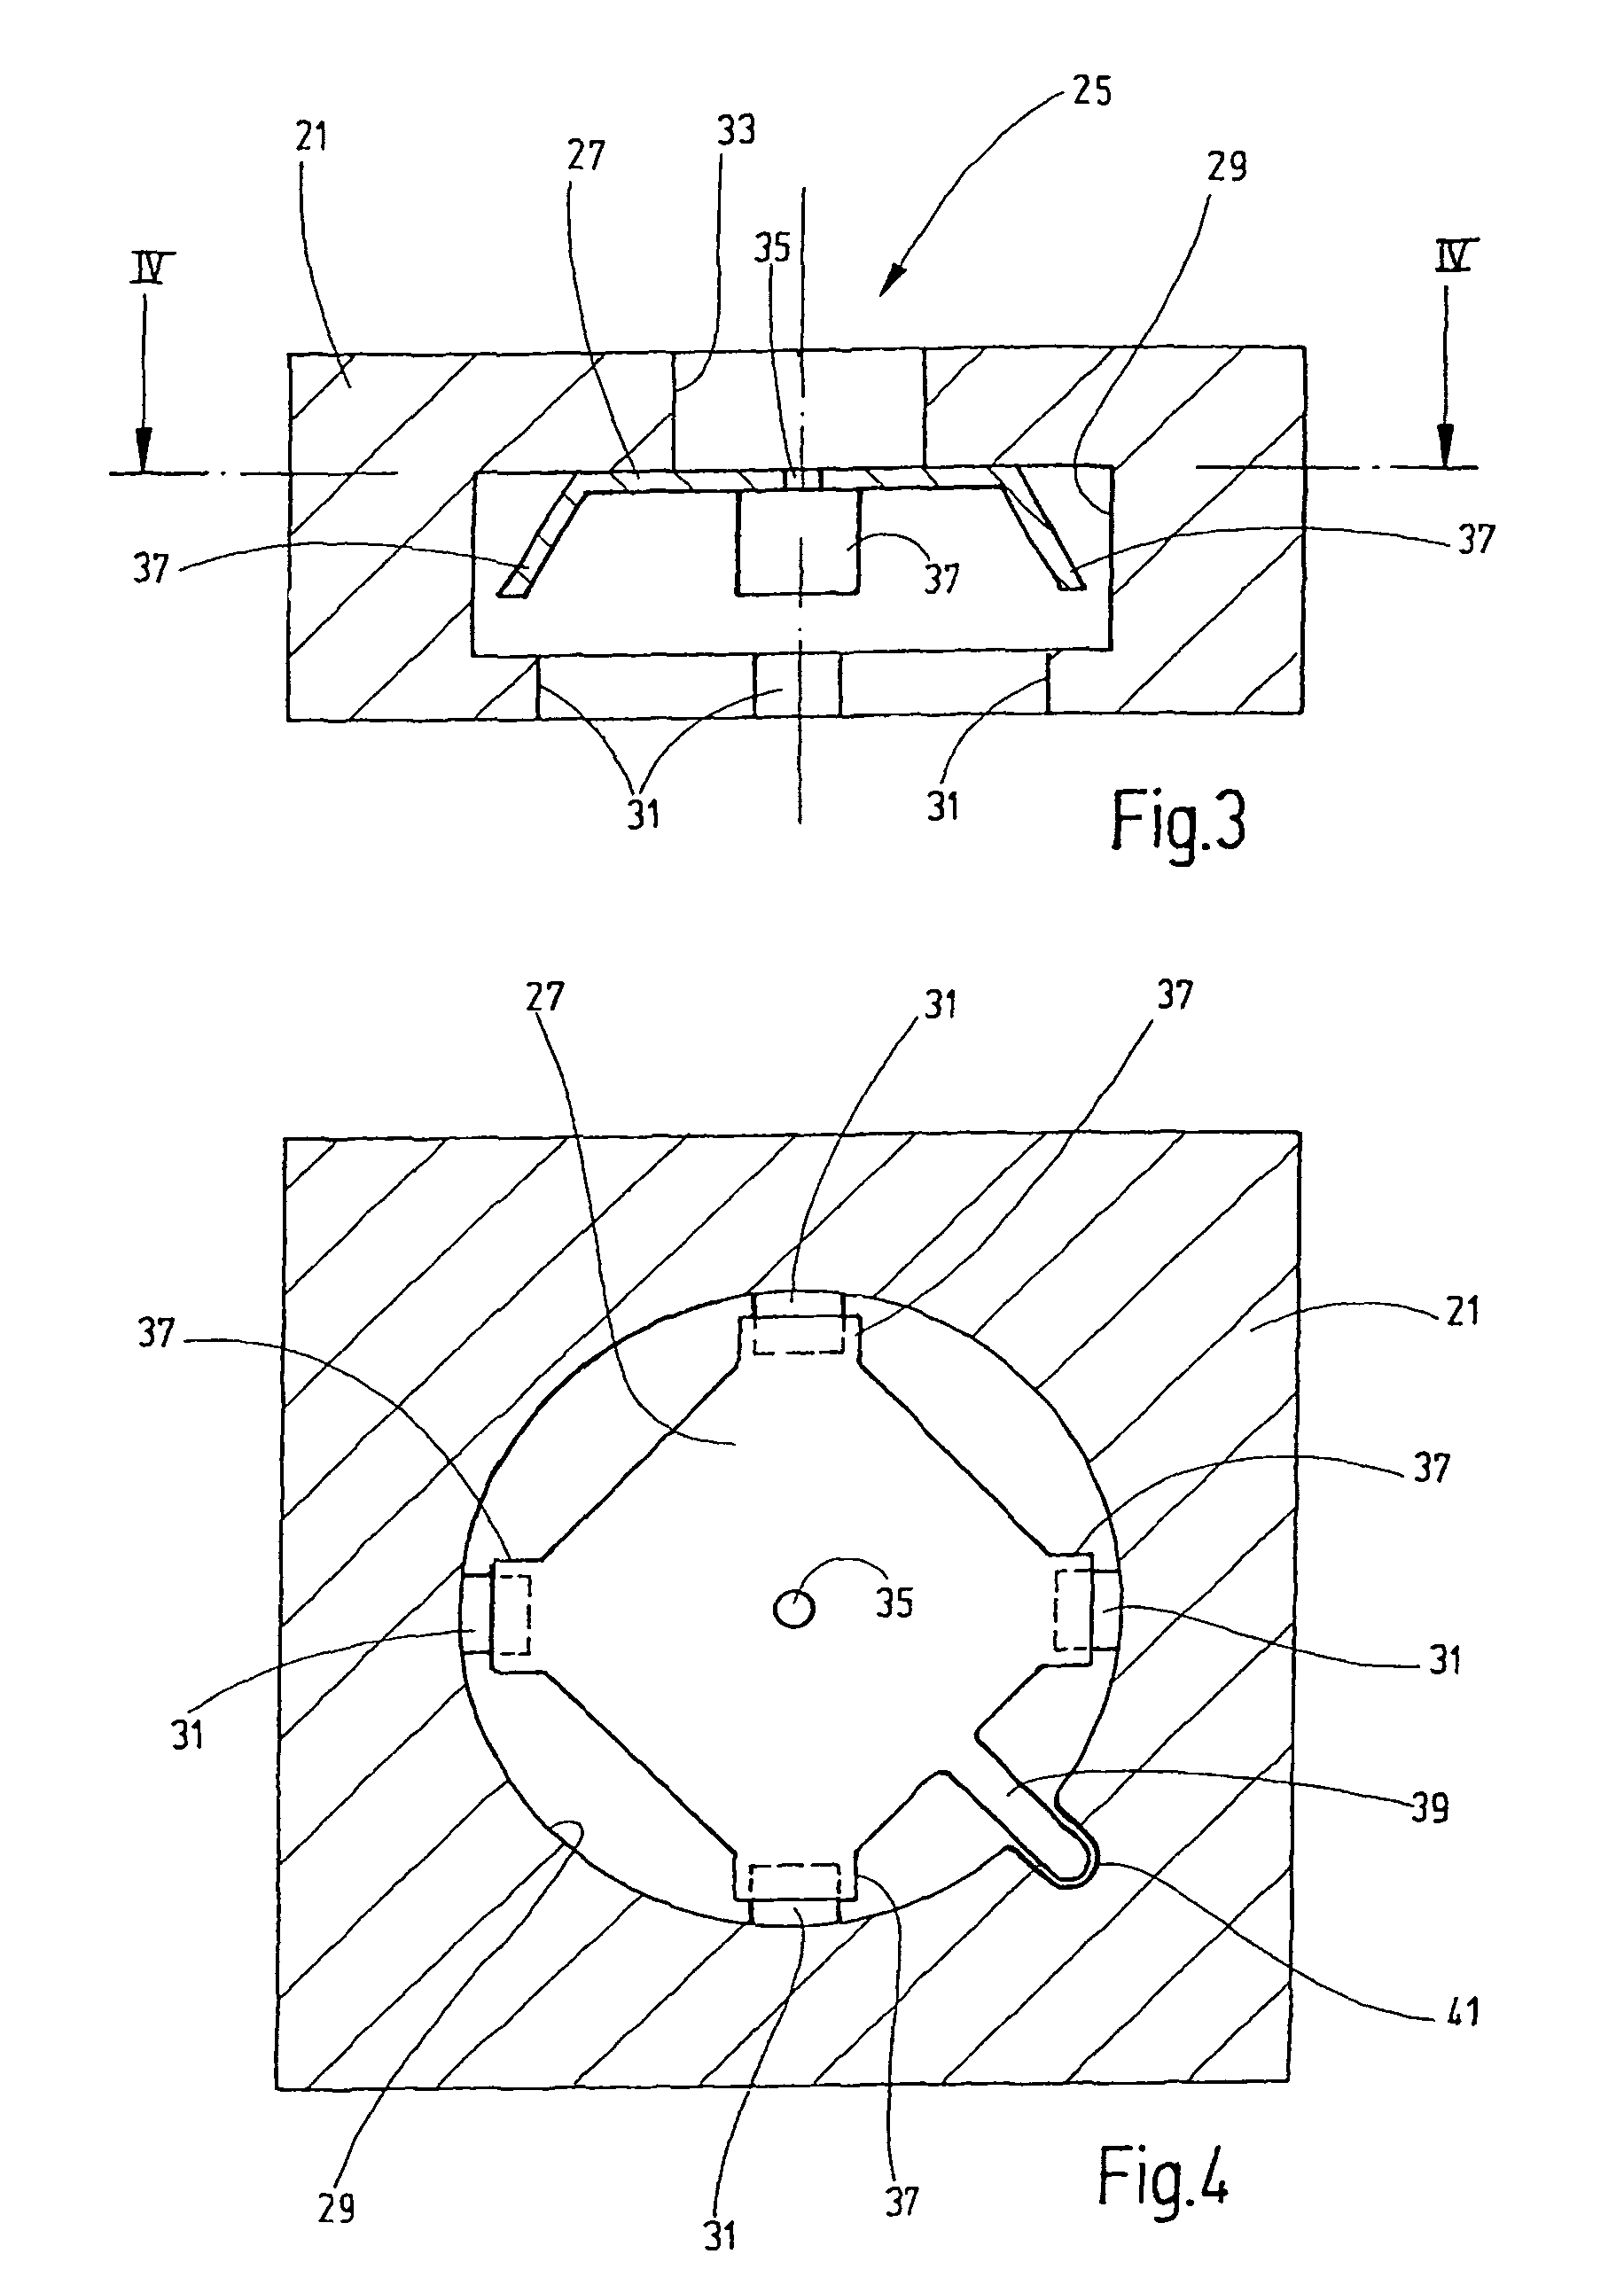 Hydropneumatic piston/cylinder arrangement